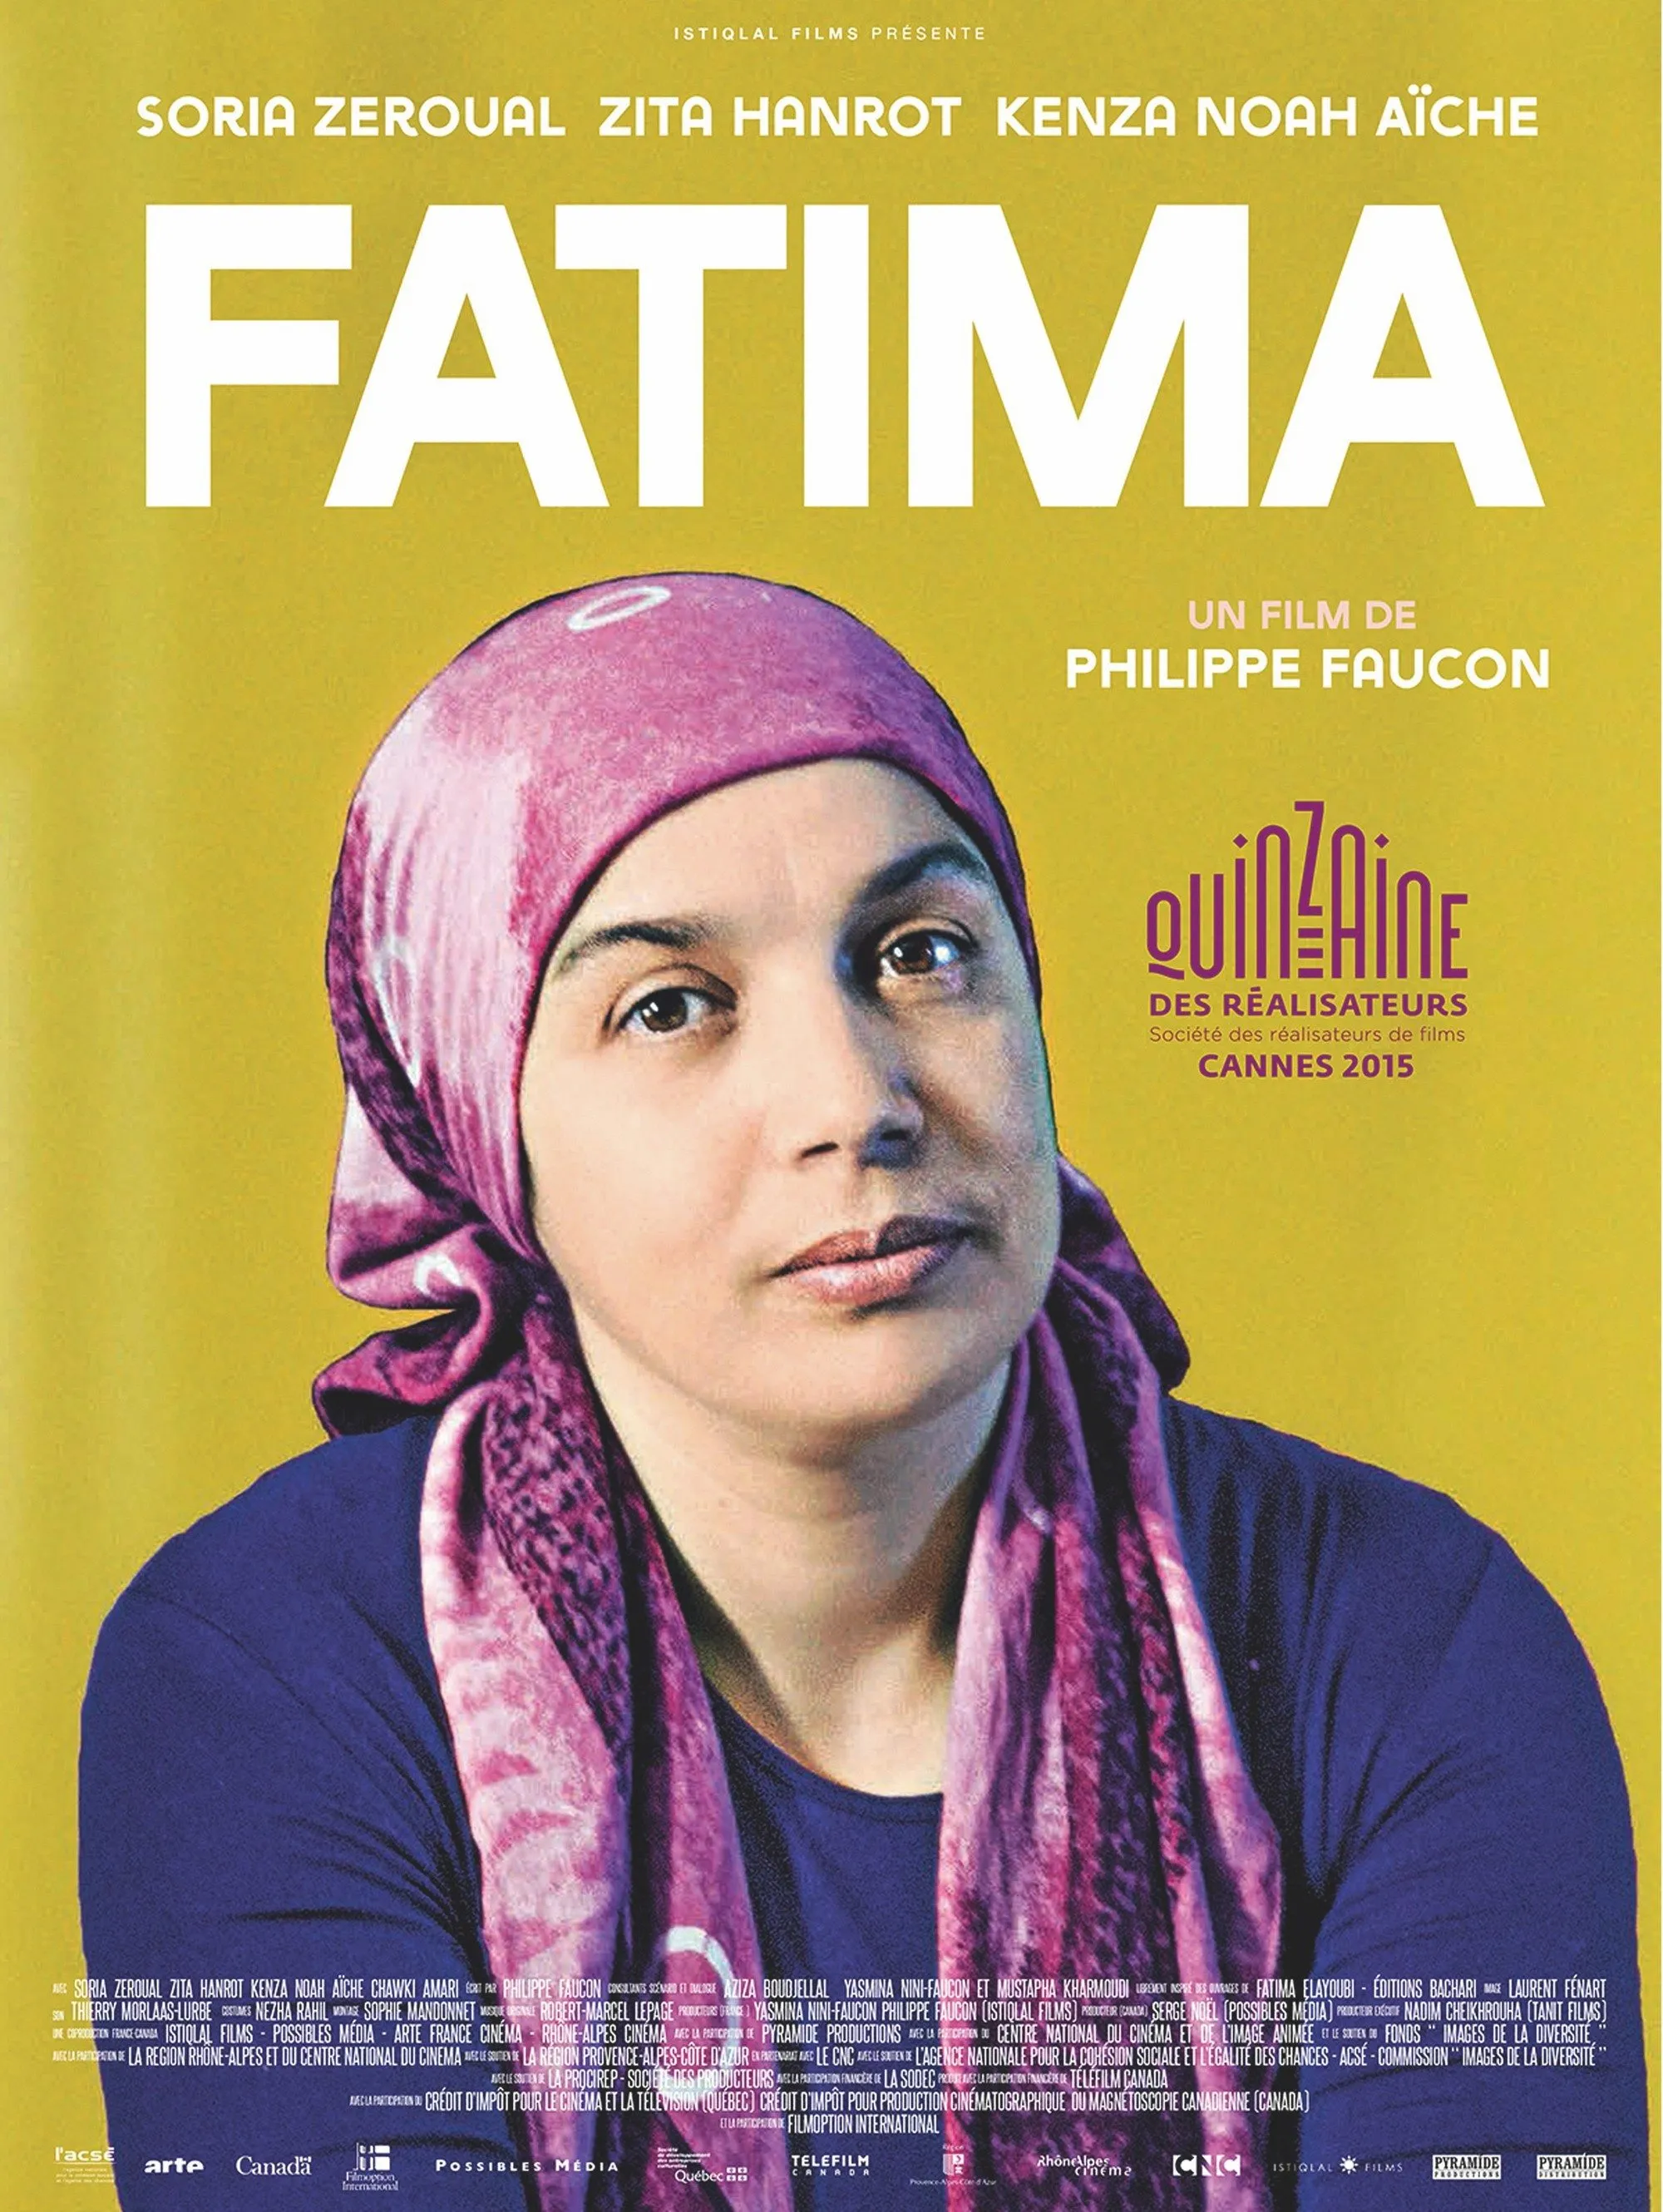 Affiche du film Fatima de Philippe Faucon, 2015